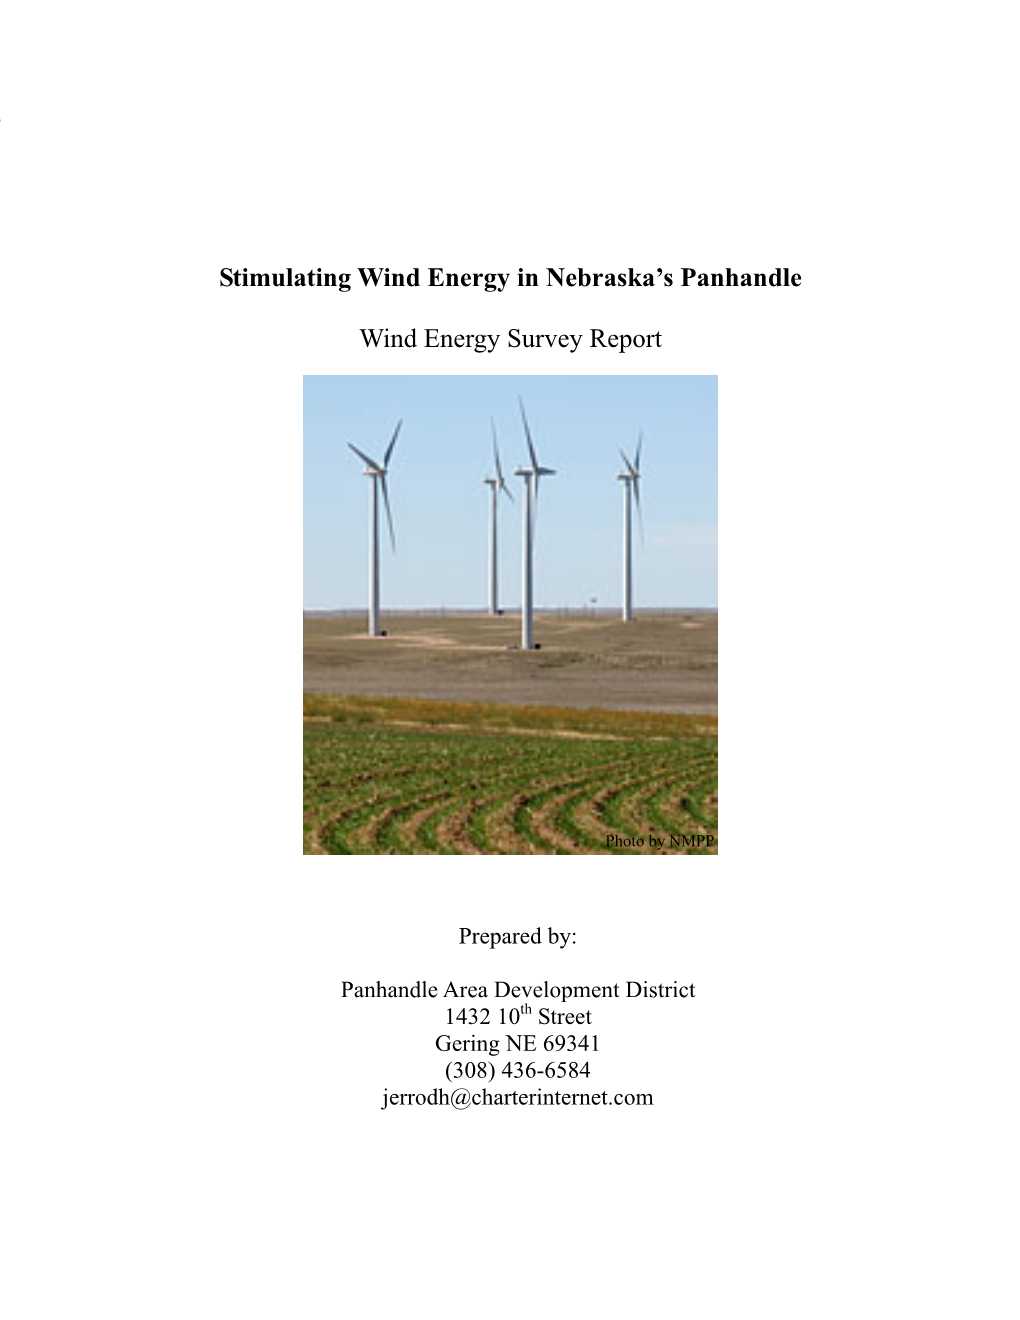 Stimulating Wind Energy in Nebraska's Panhandle, December